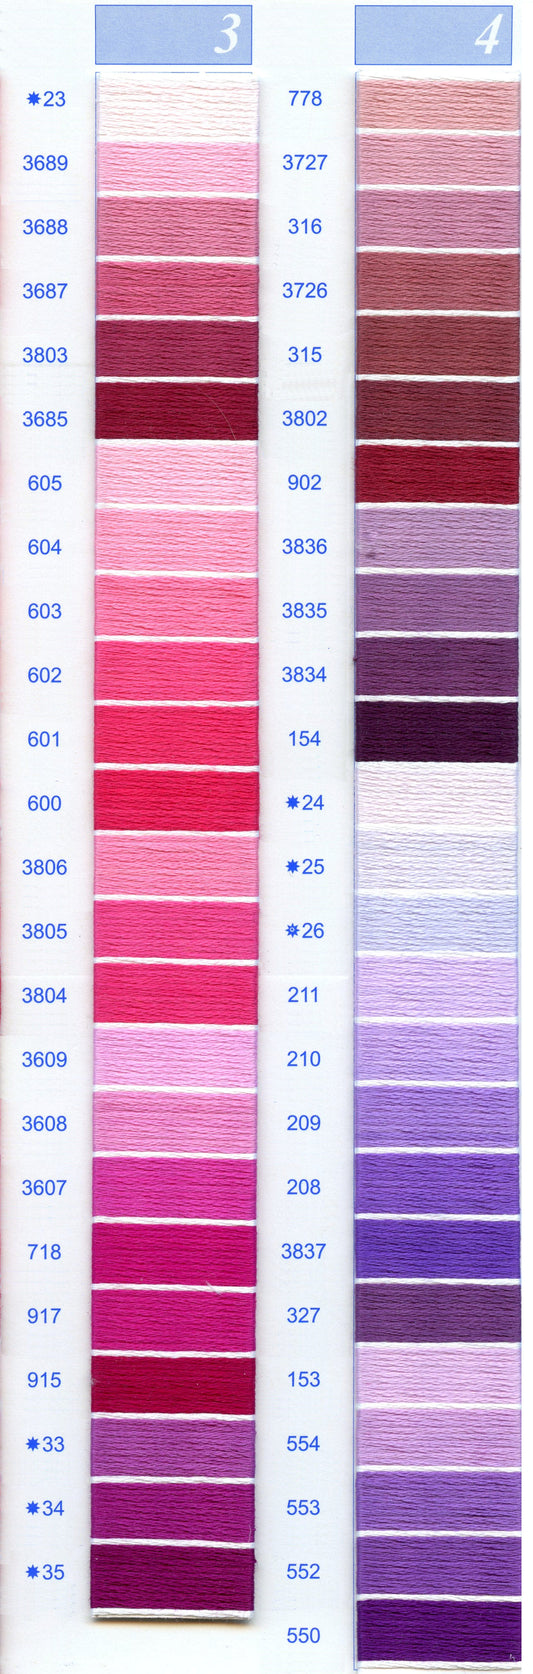 DMC Embroidery Floss Chart - Columns 3 & 4